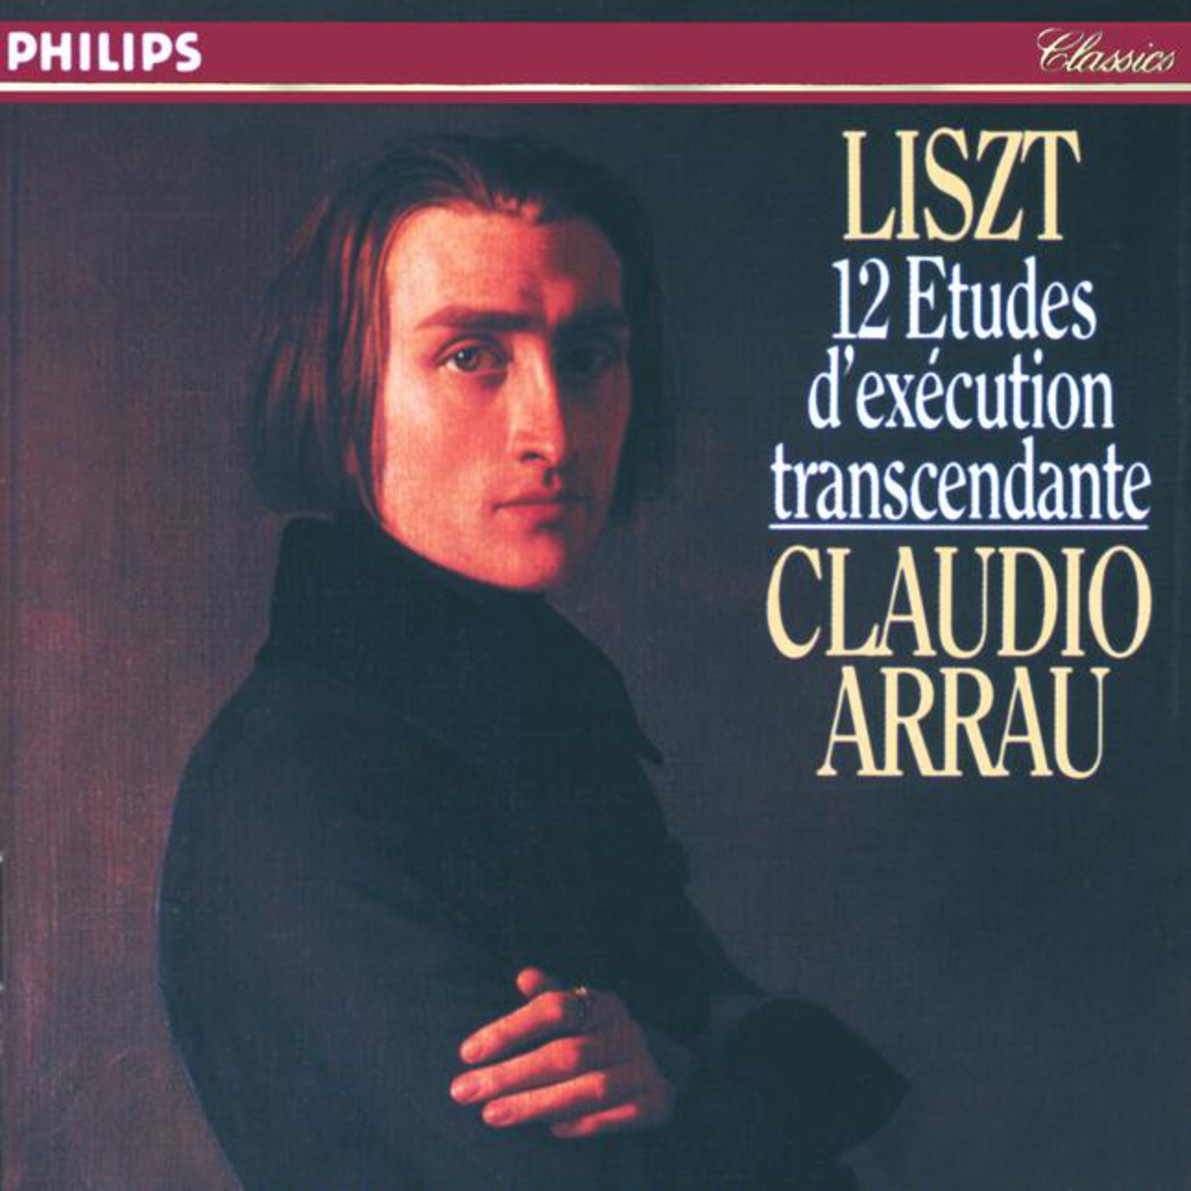 Liszt: 12 Etudes d' exe cution transcendante, S. 139  No. 7 Eroica Allegro